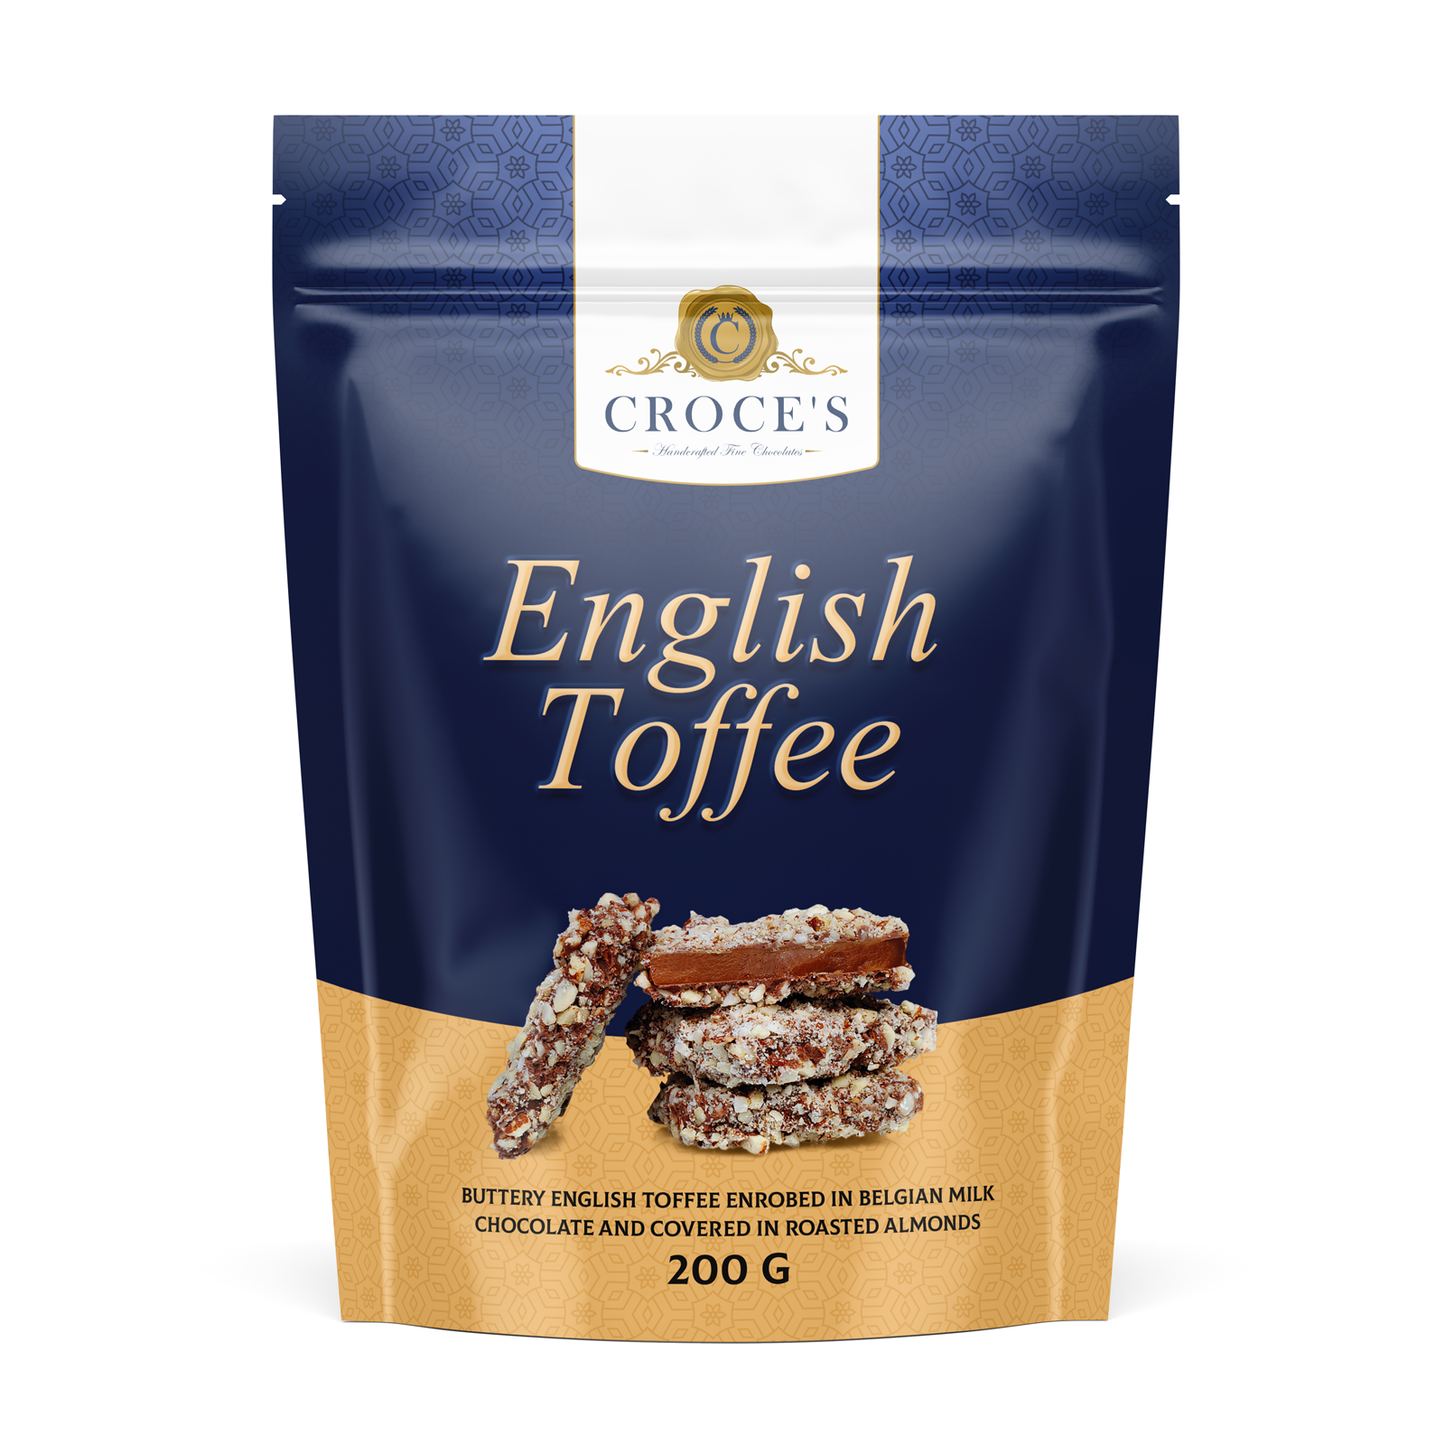 Croce's English Toffee